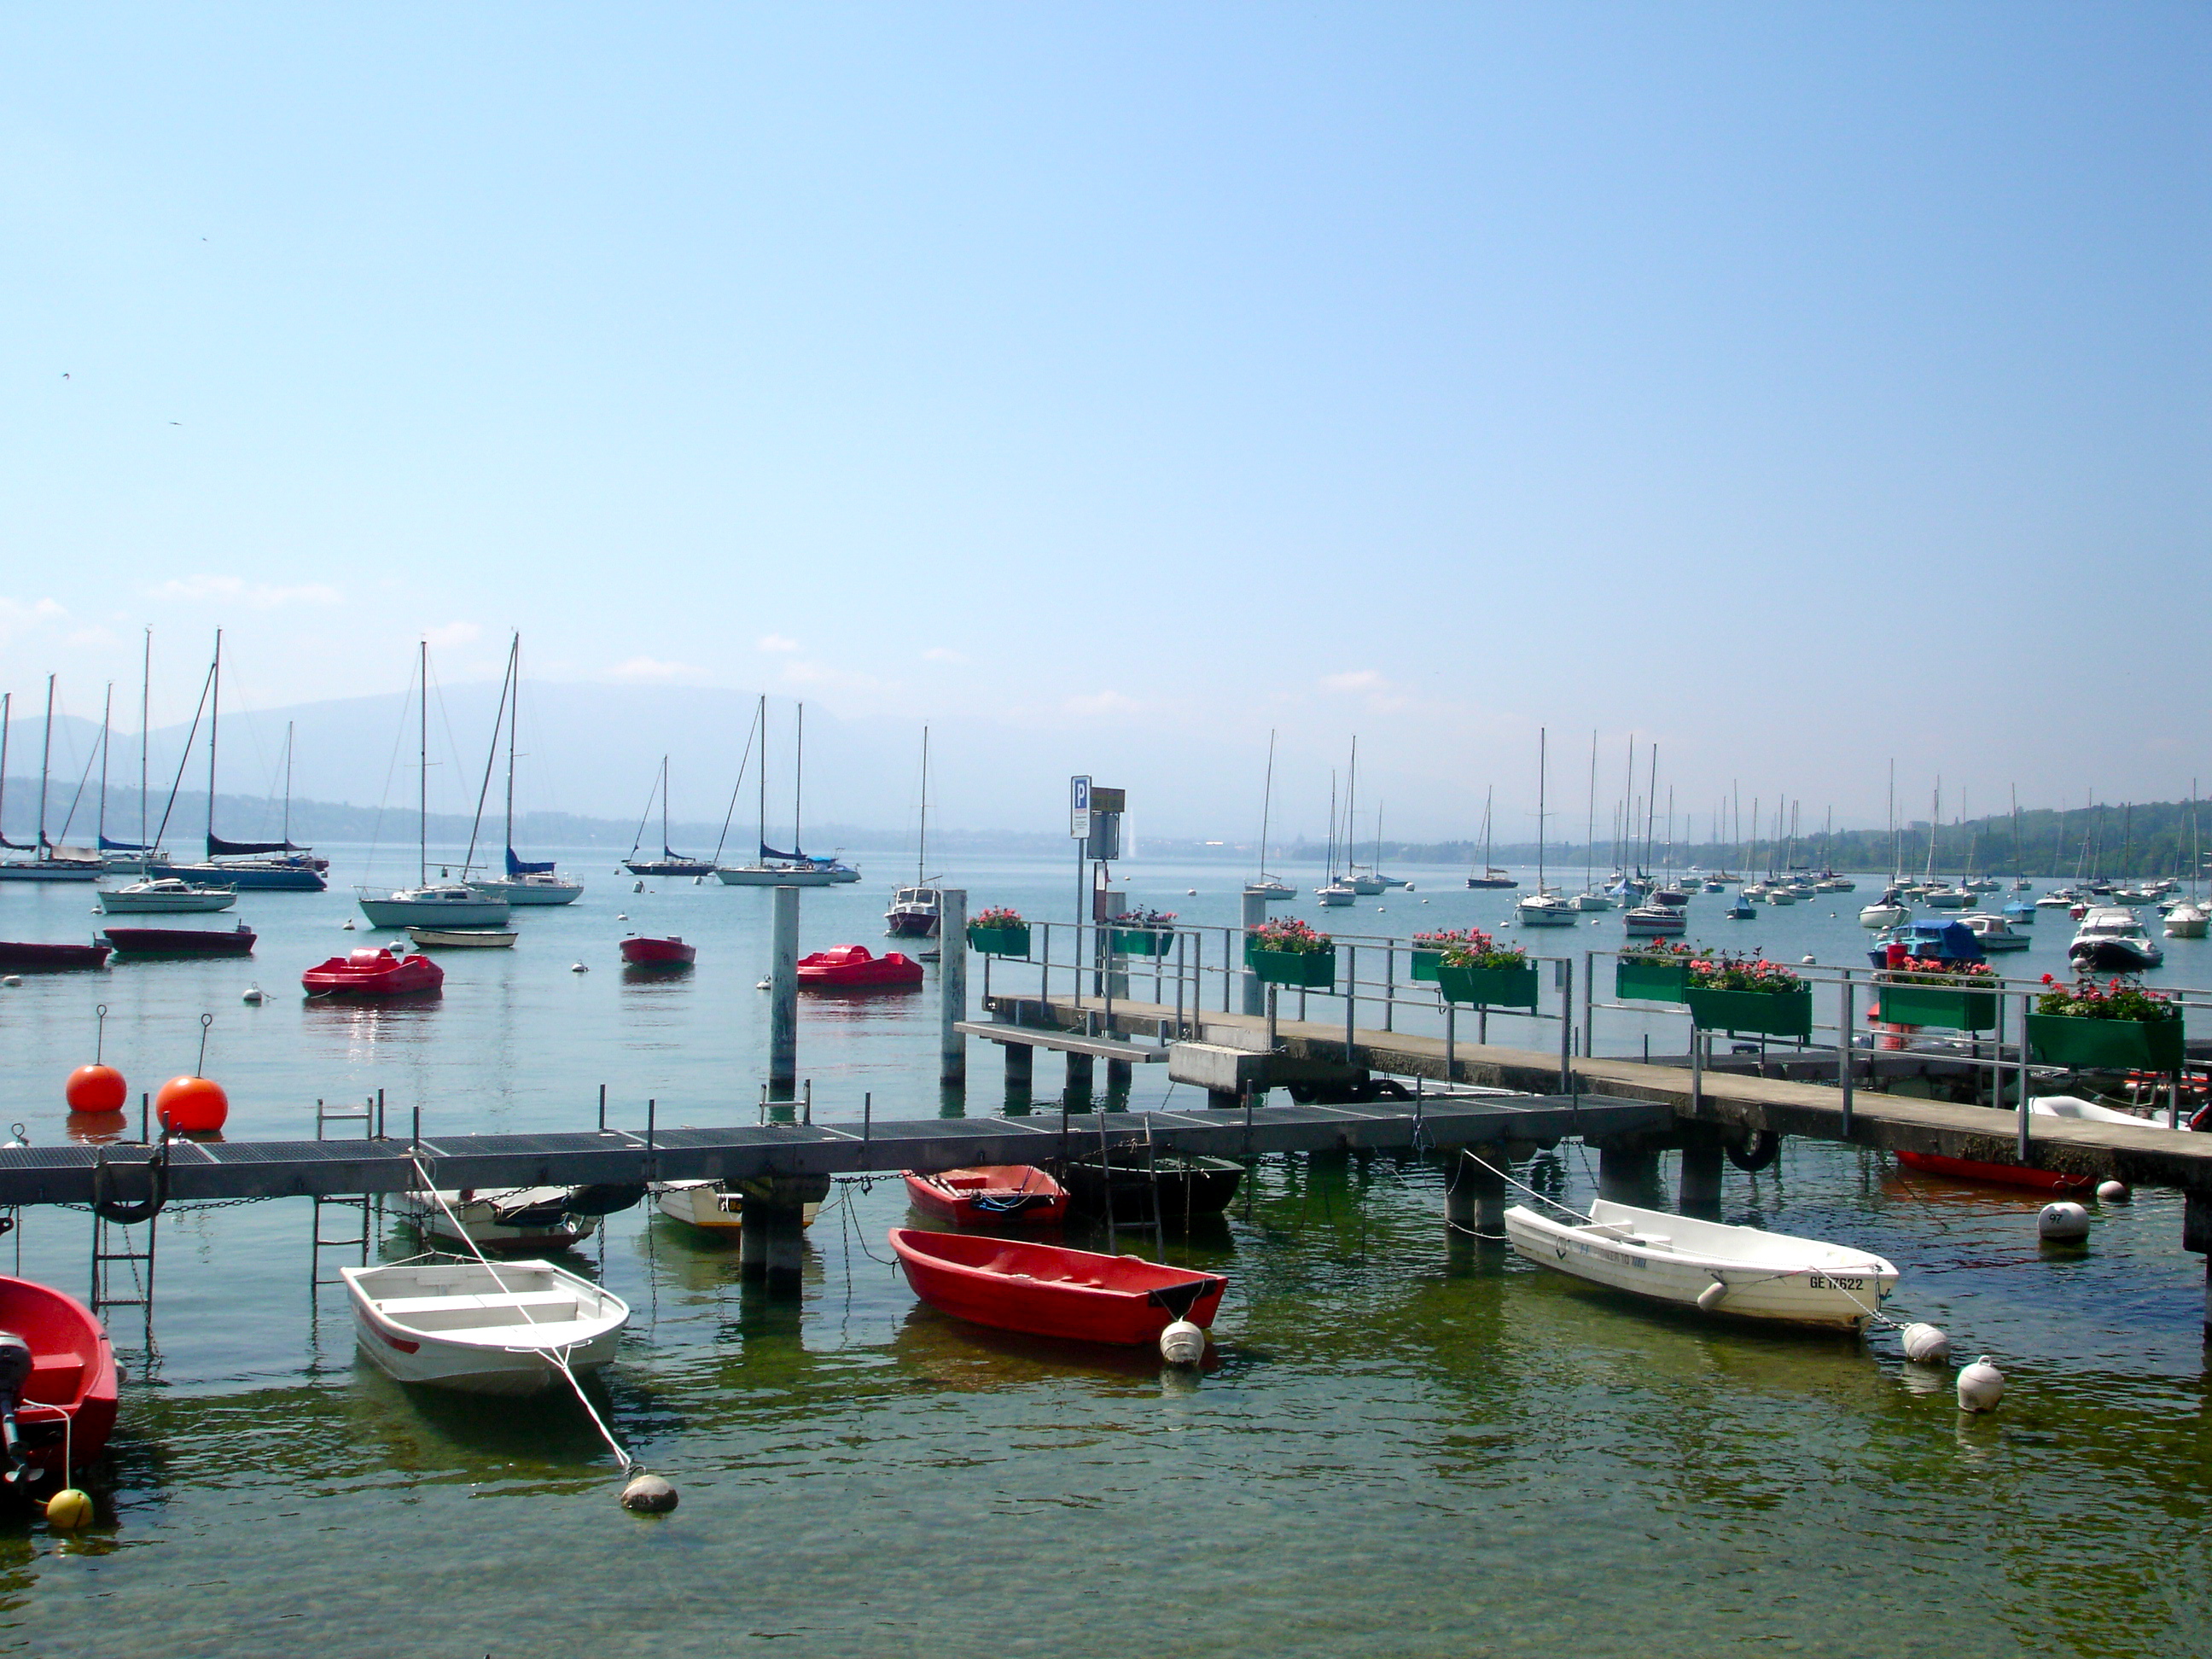 docked boats on Lake Geneva